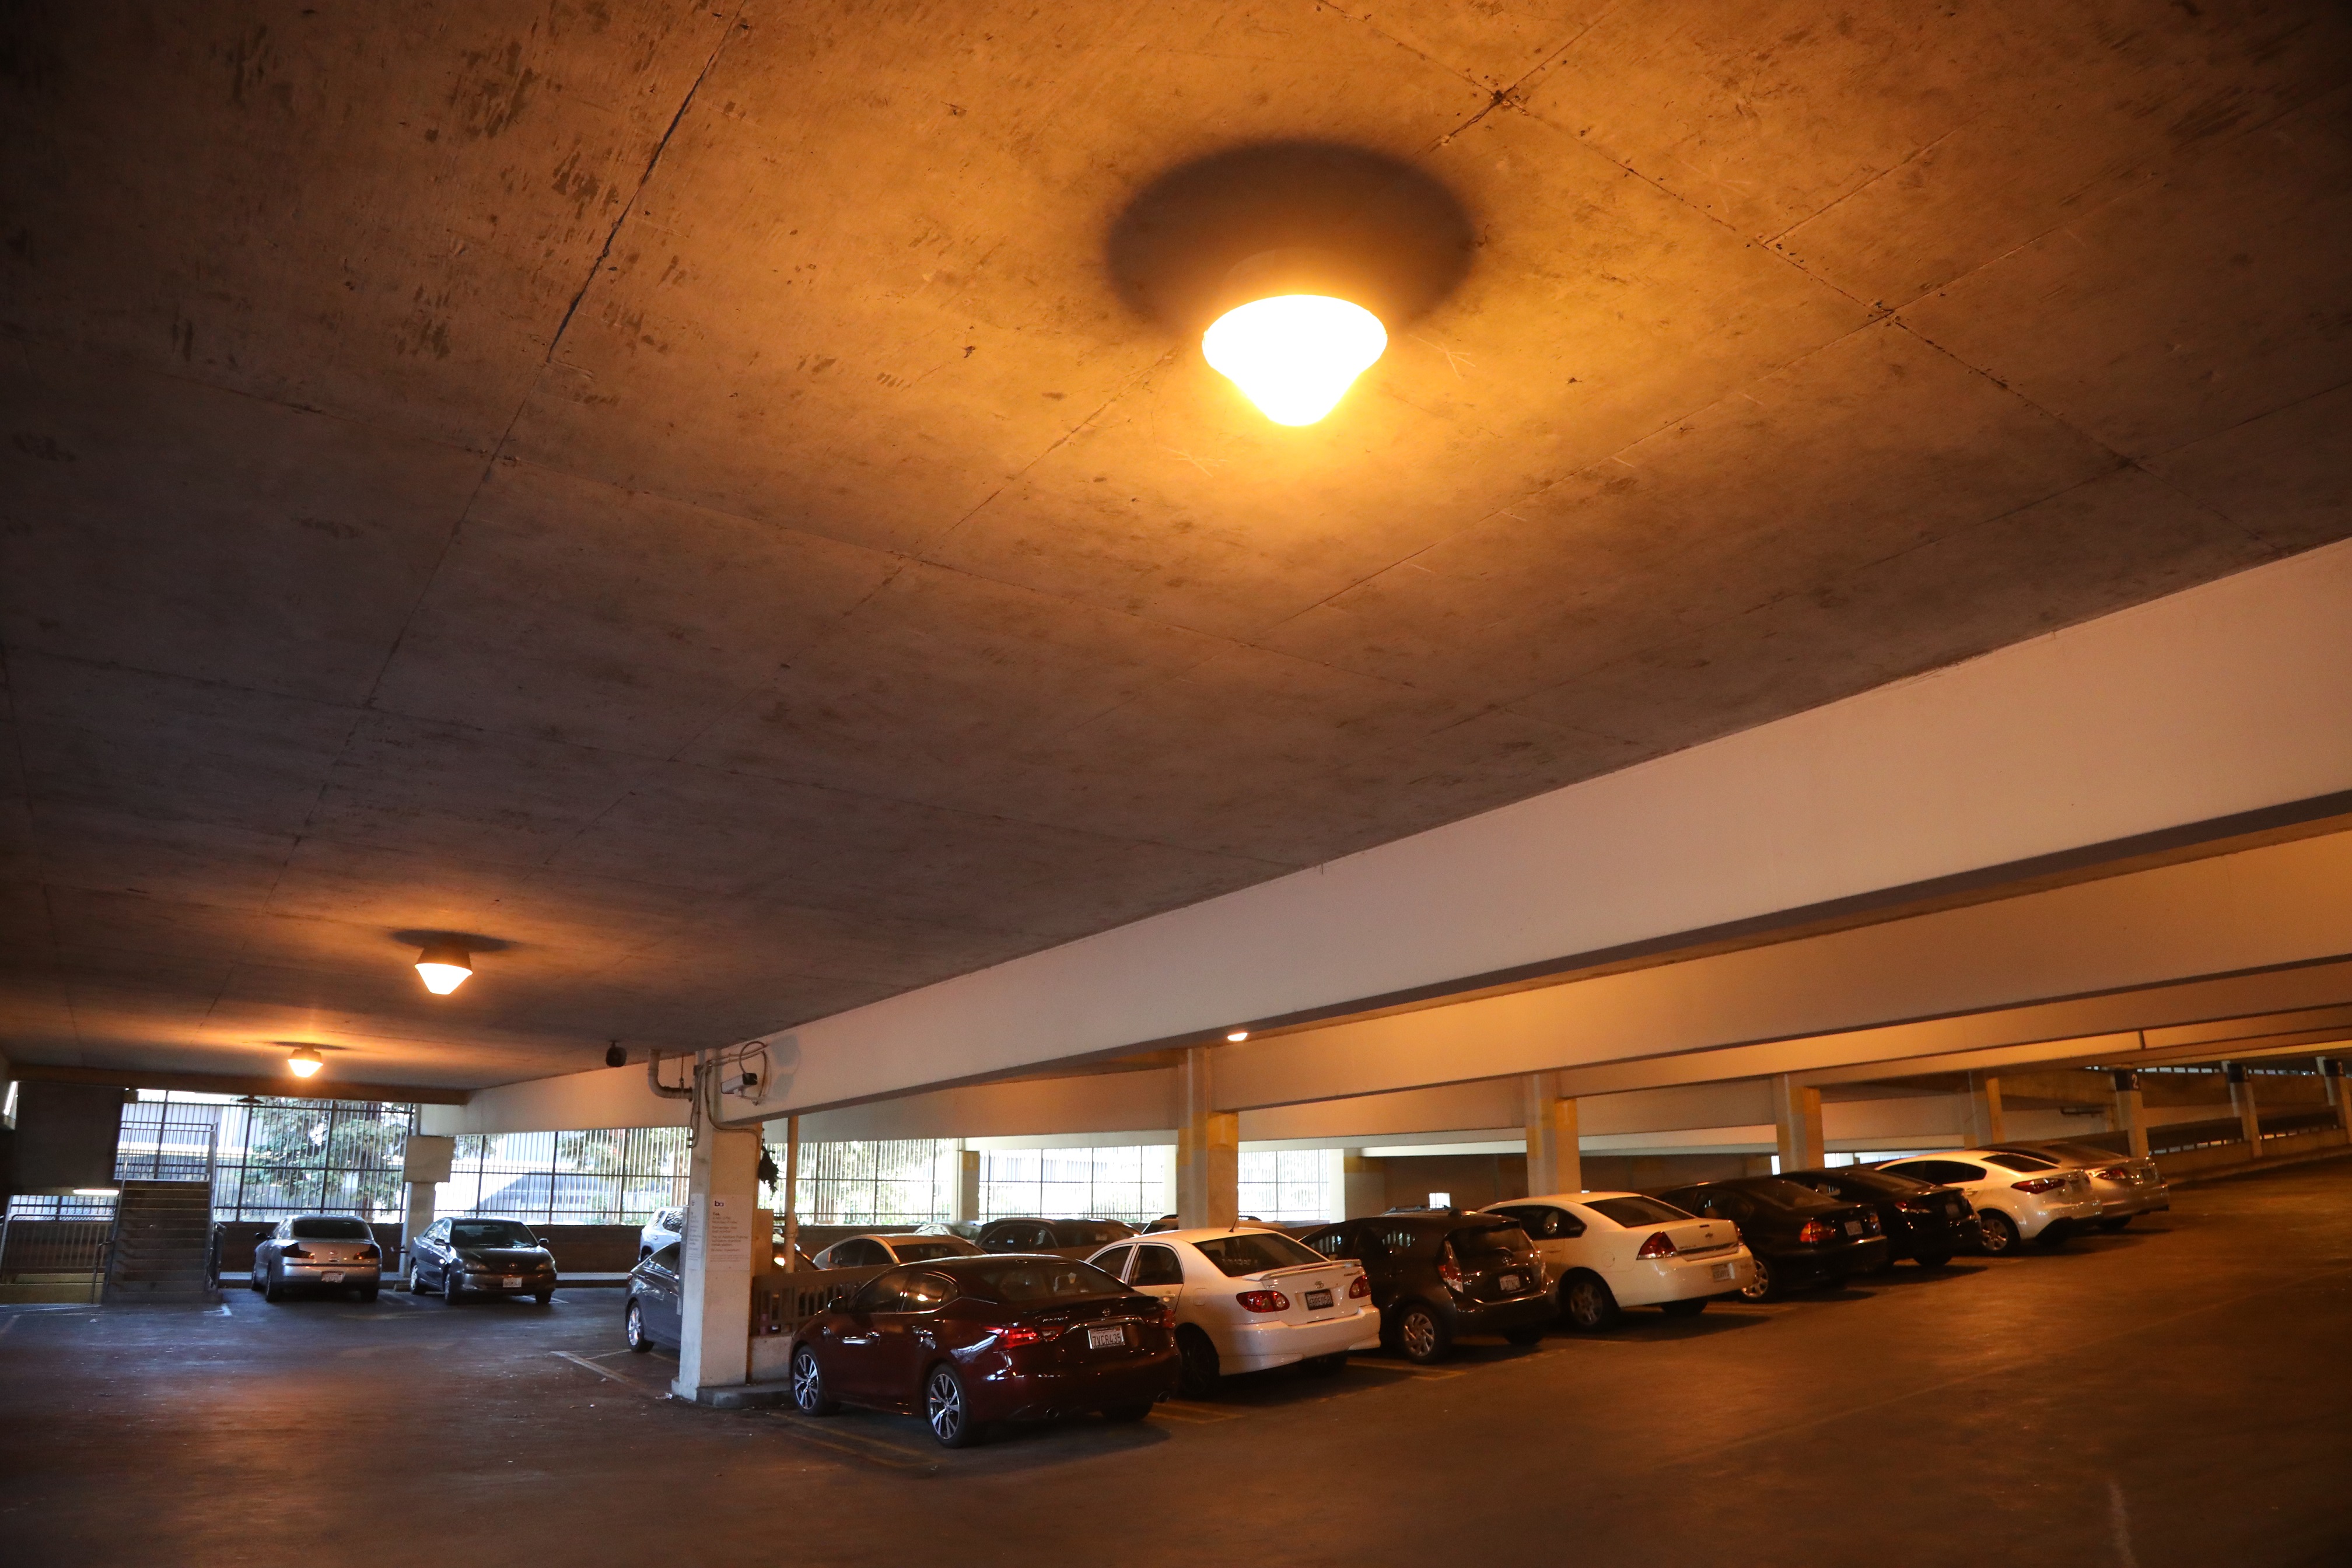 Hayward Parking Garage lit using old sodium vapor lights